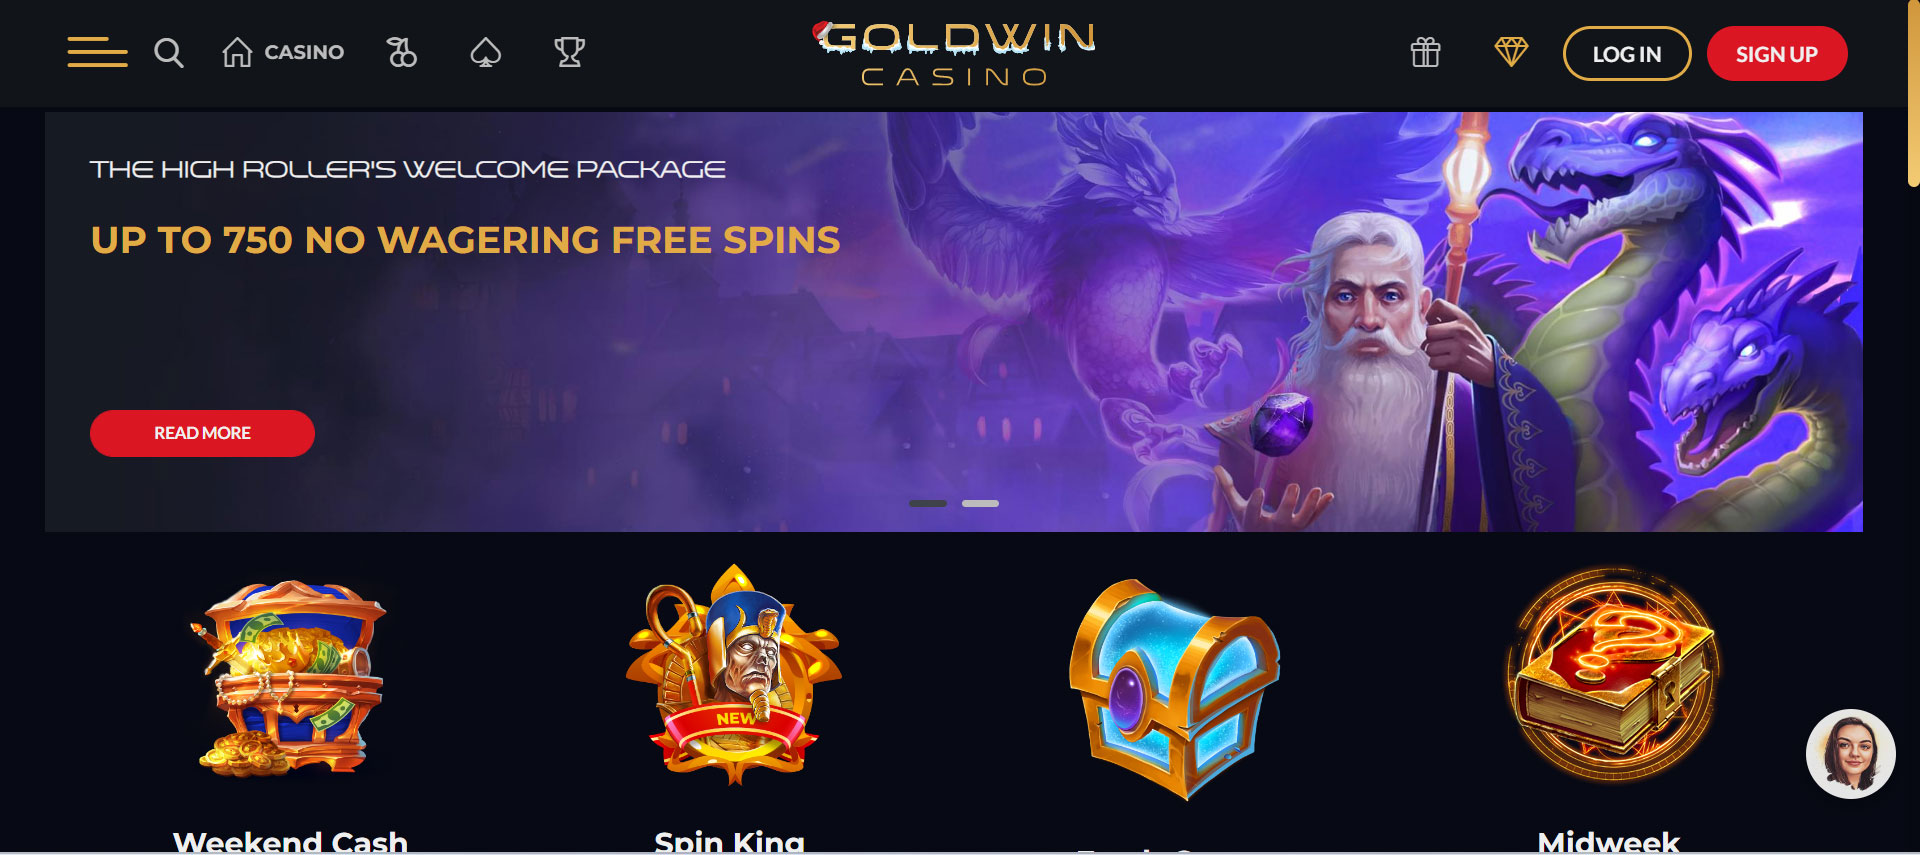 GoldWin Casino Promotions